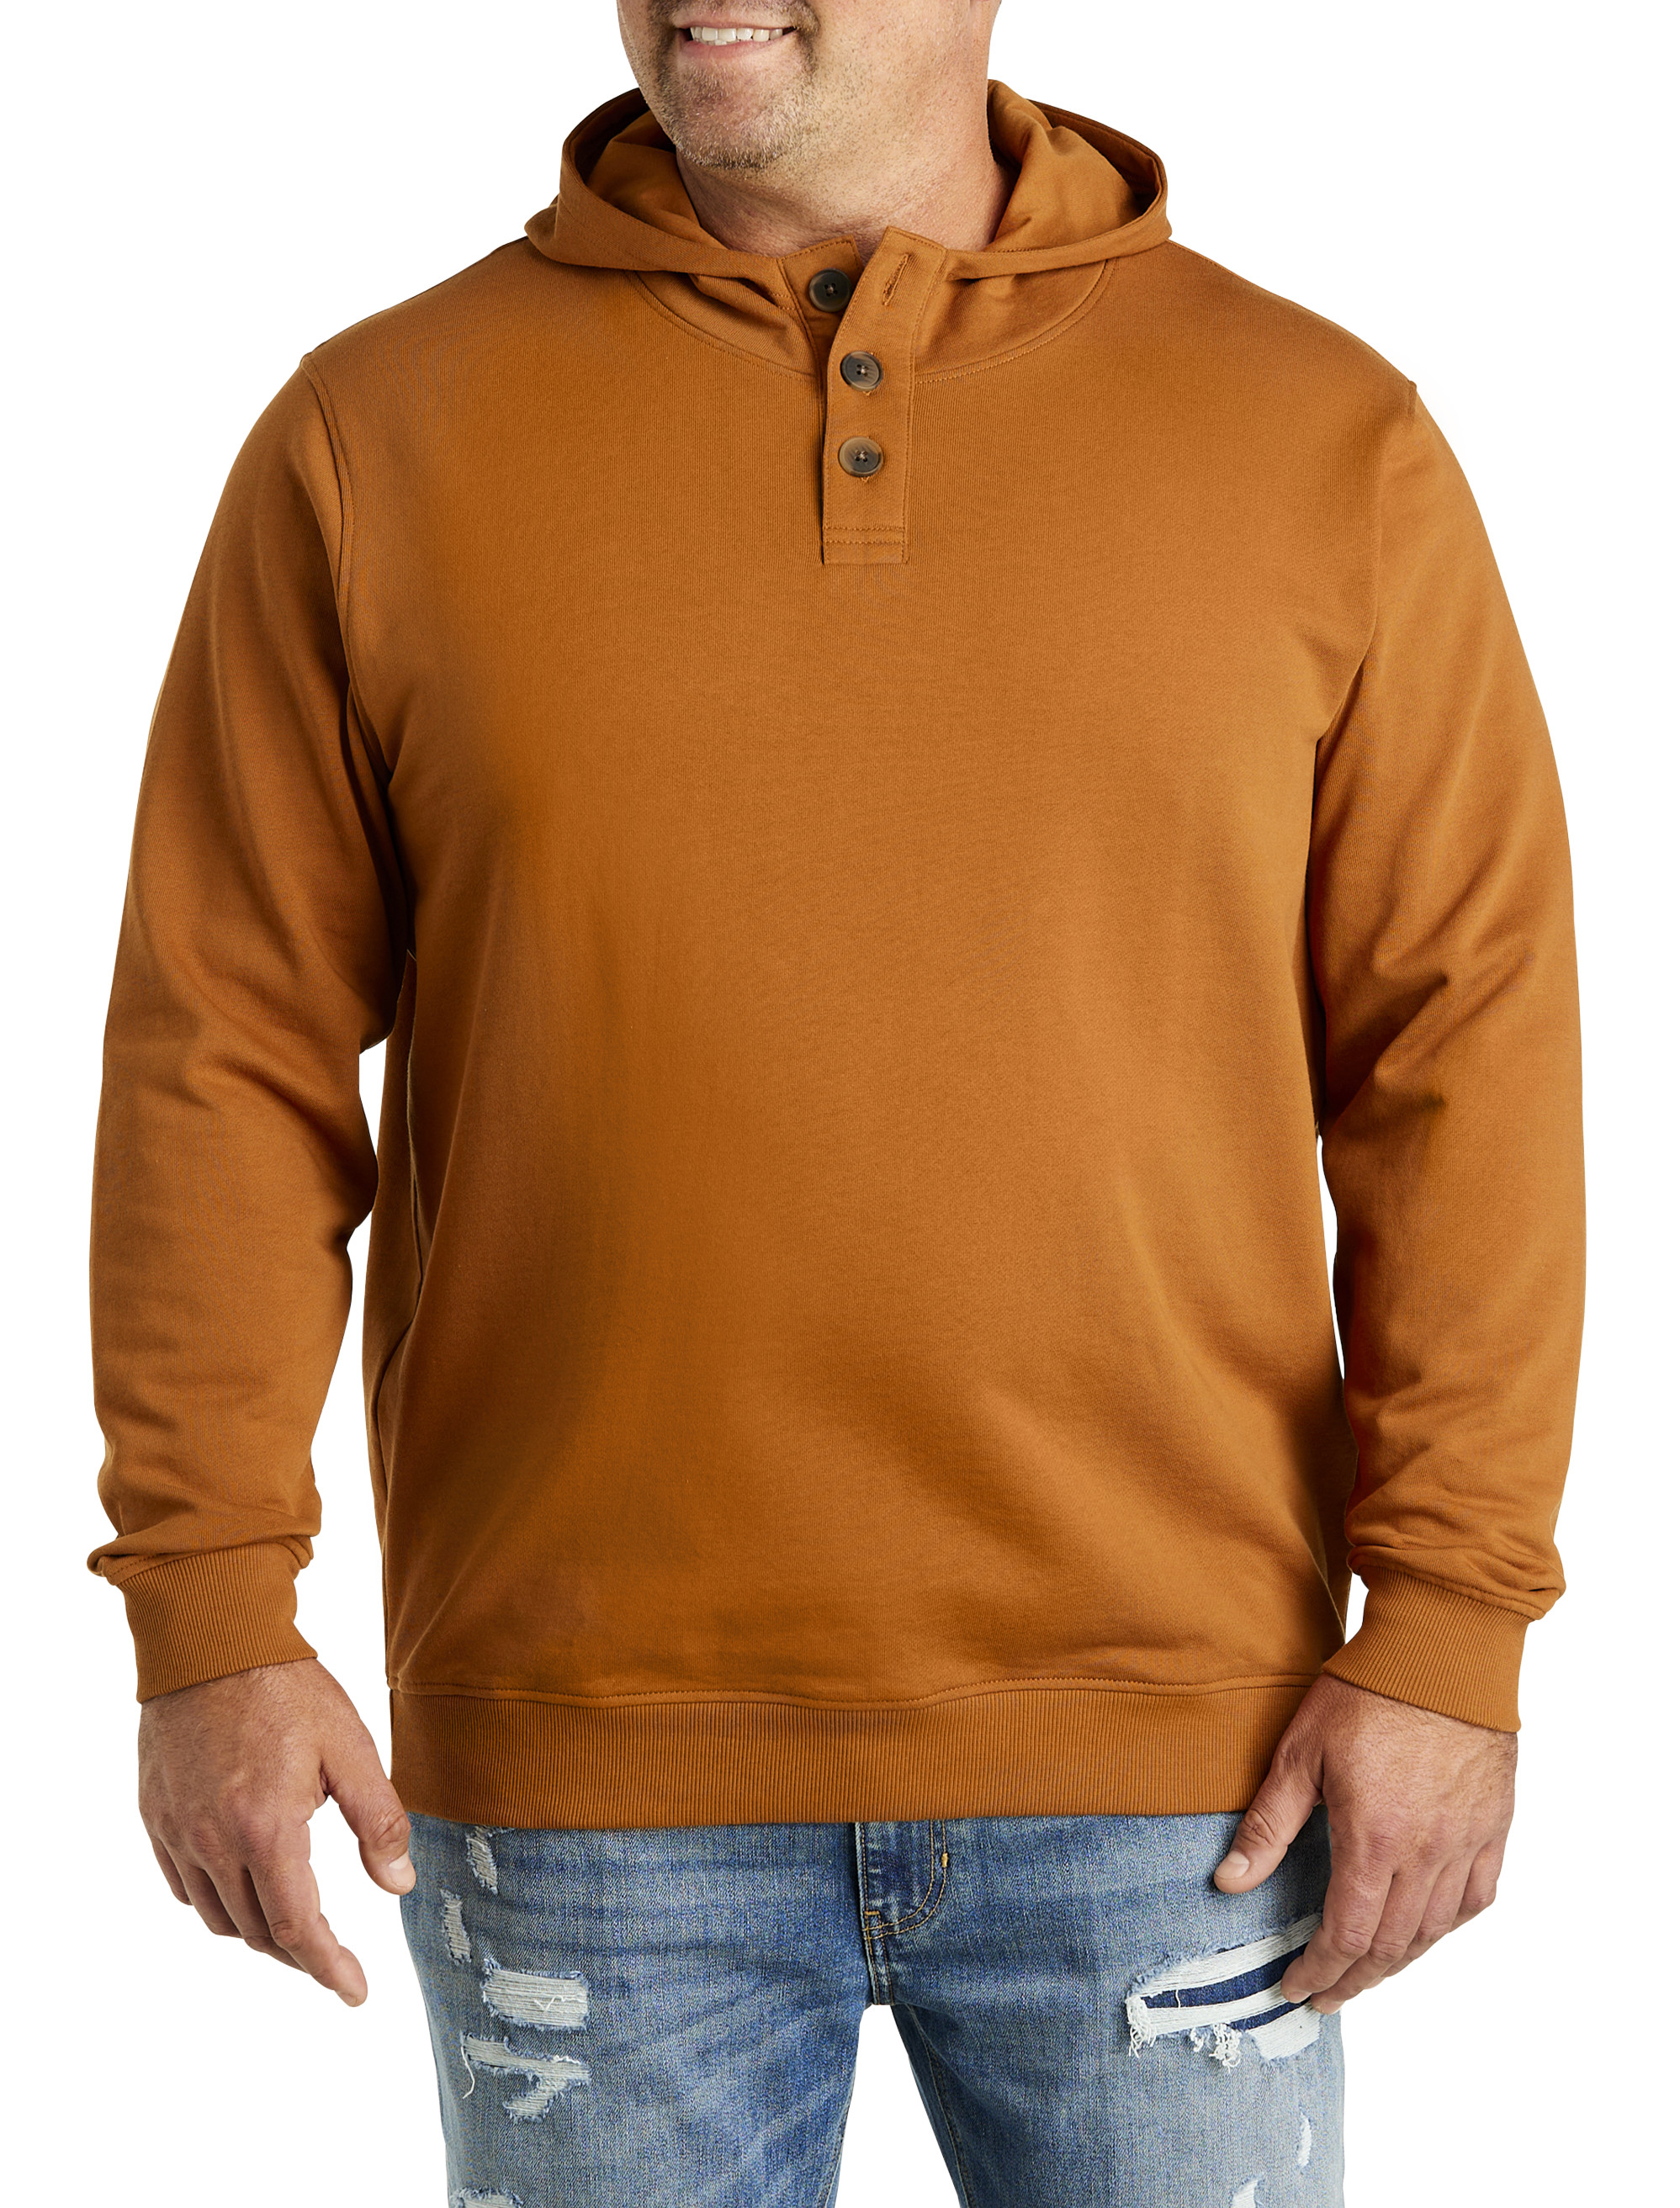 Men's Size 1XLT Hoodies & Sweatshirts, Big and Tall